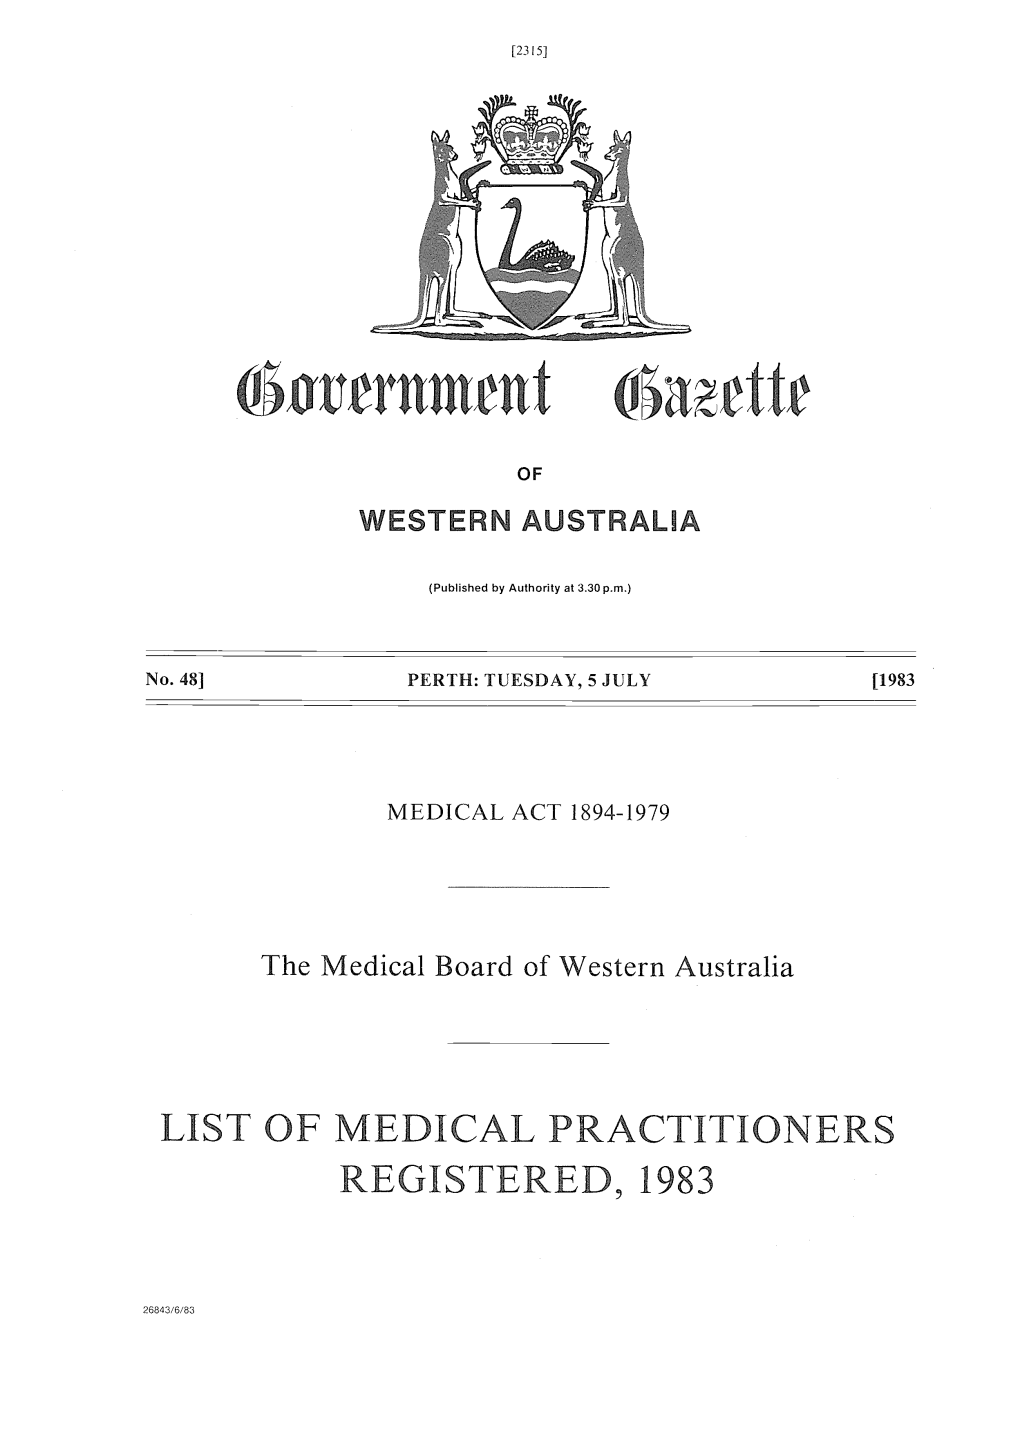 List of Medical Practitioners Registered, 1983